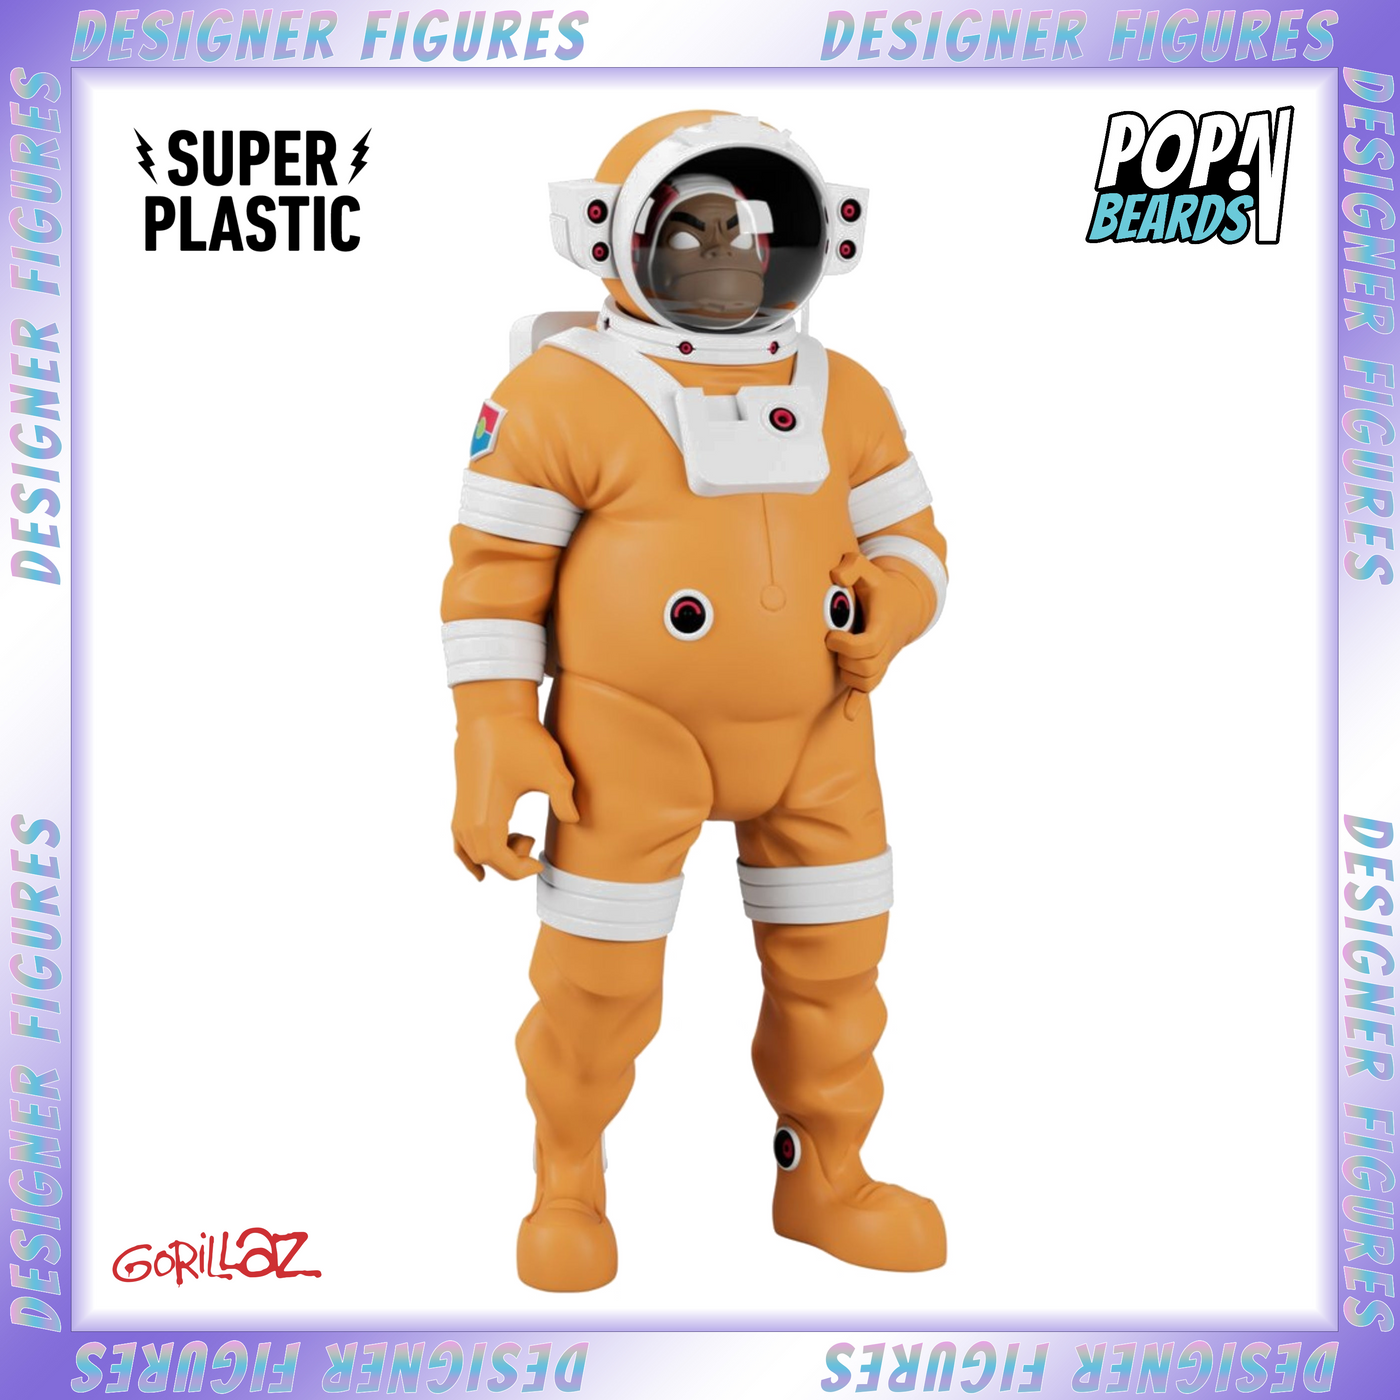 SuperPlastic: The Gorillaz, Russel (Astronaut) (Lights Up) (LE)